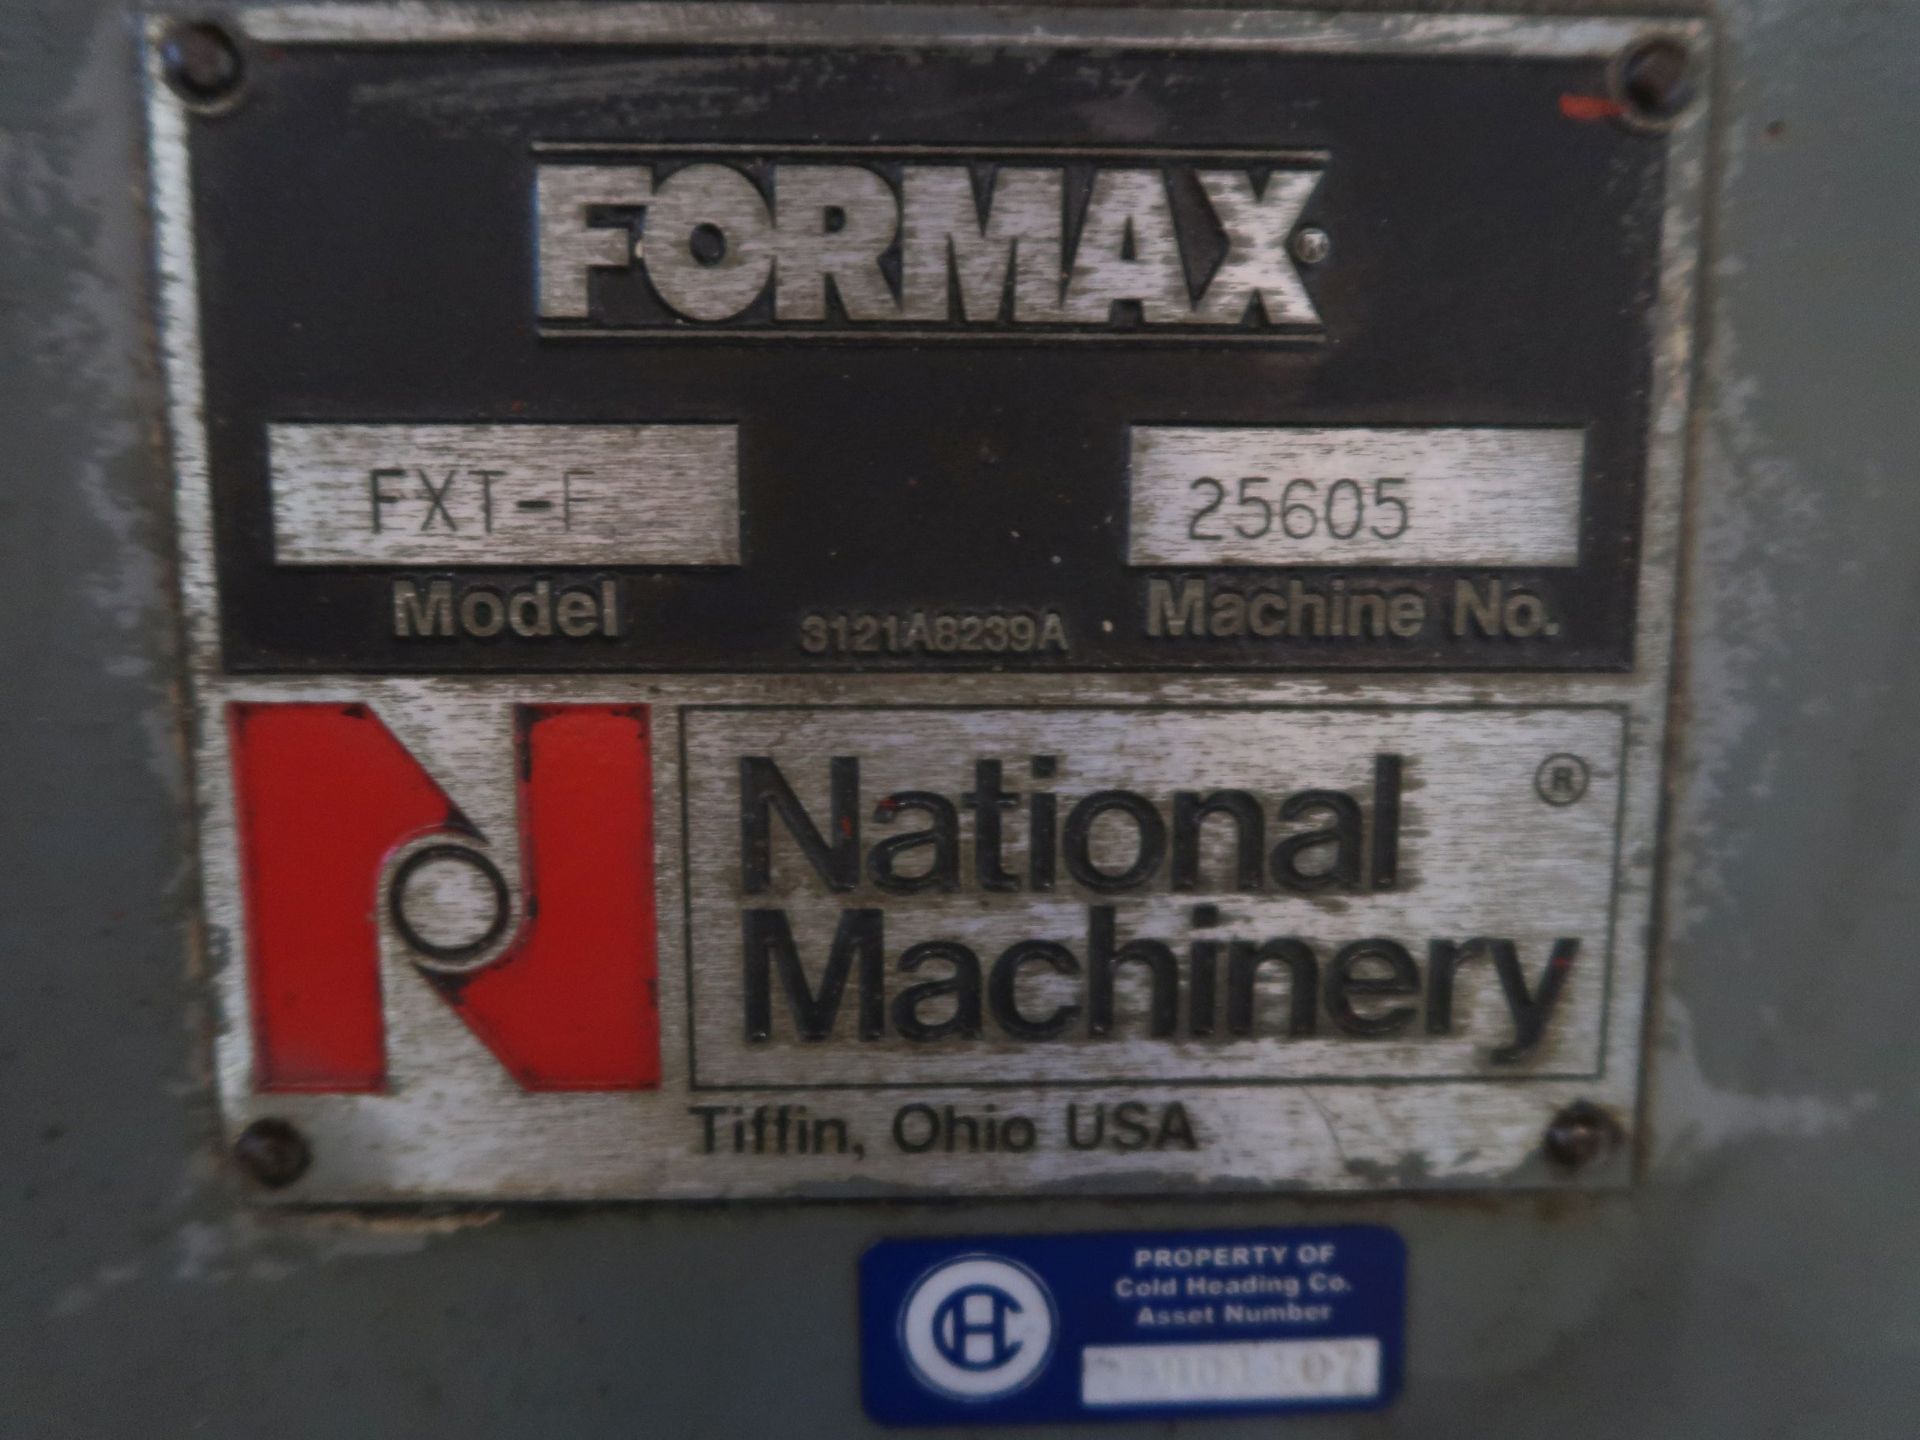 NATIONAL FORMAX MODEL FXT-F THREAD ROLLER; S/N 25605 - Image 11 of 11